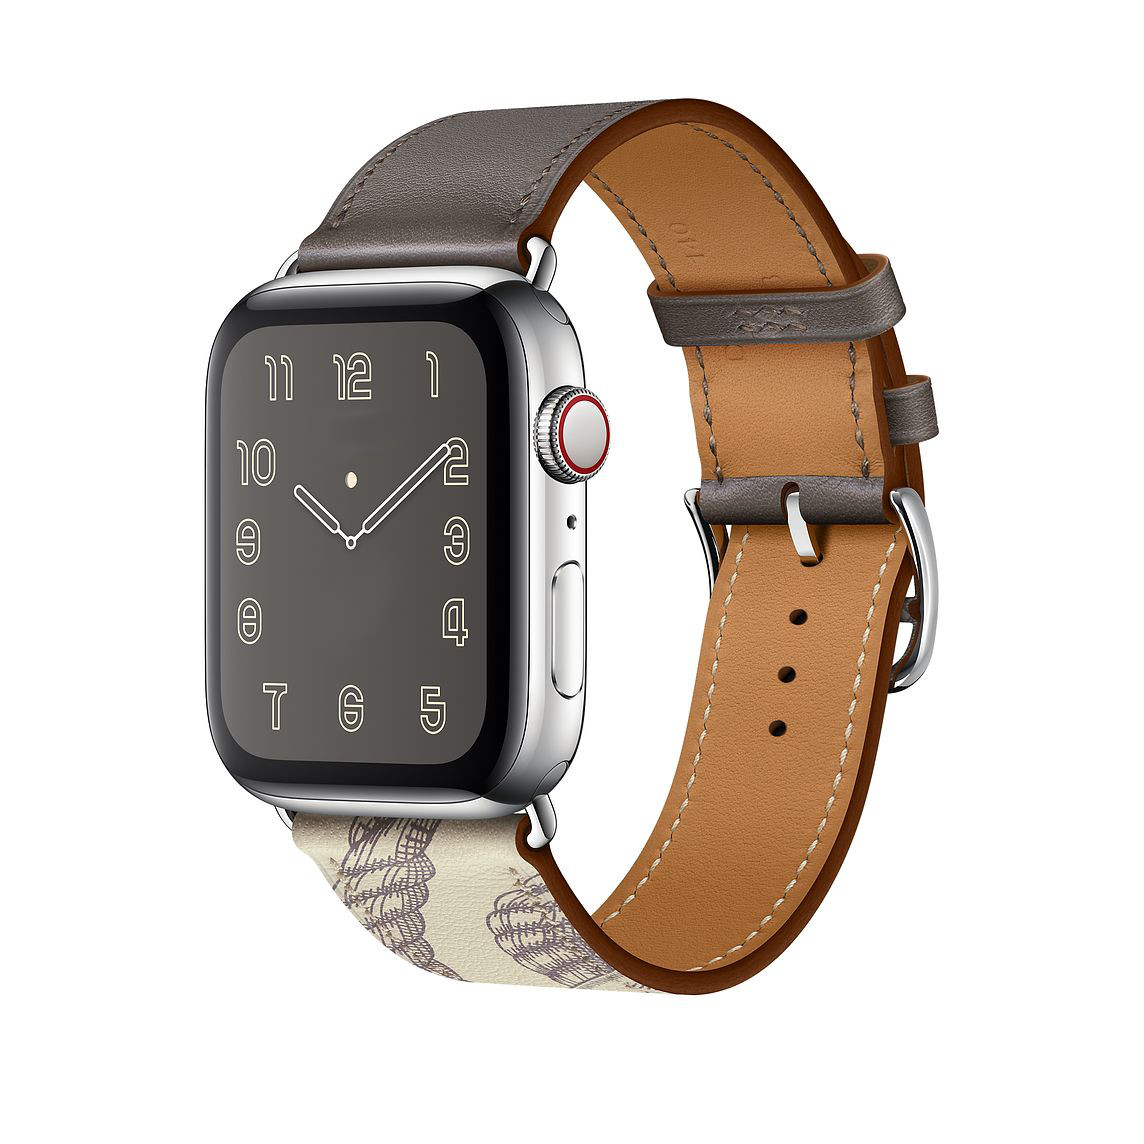 Řemínek iMore Single Tour Apple Watch Series 3/2/1 (38mm) - Cín/Beton